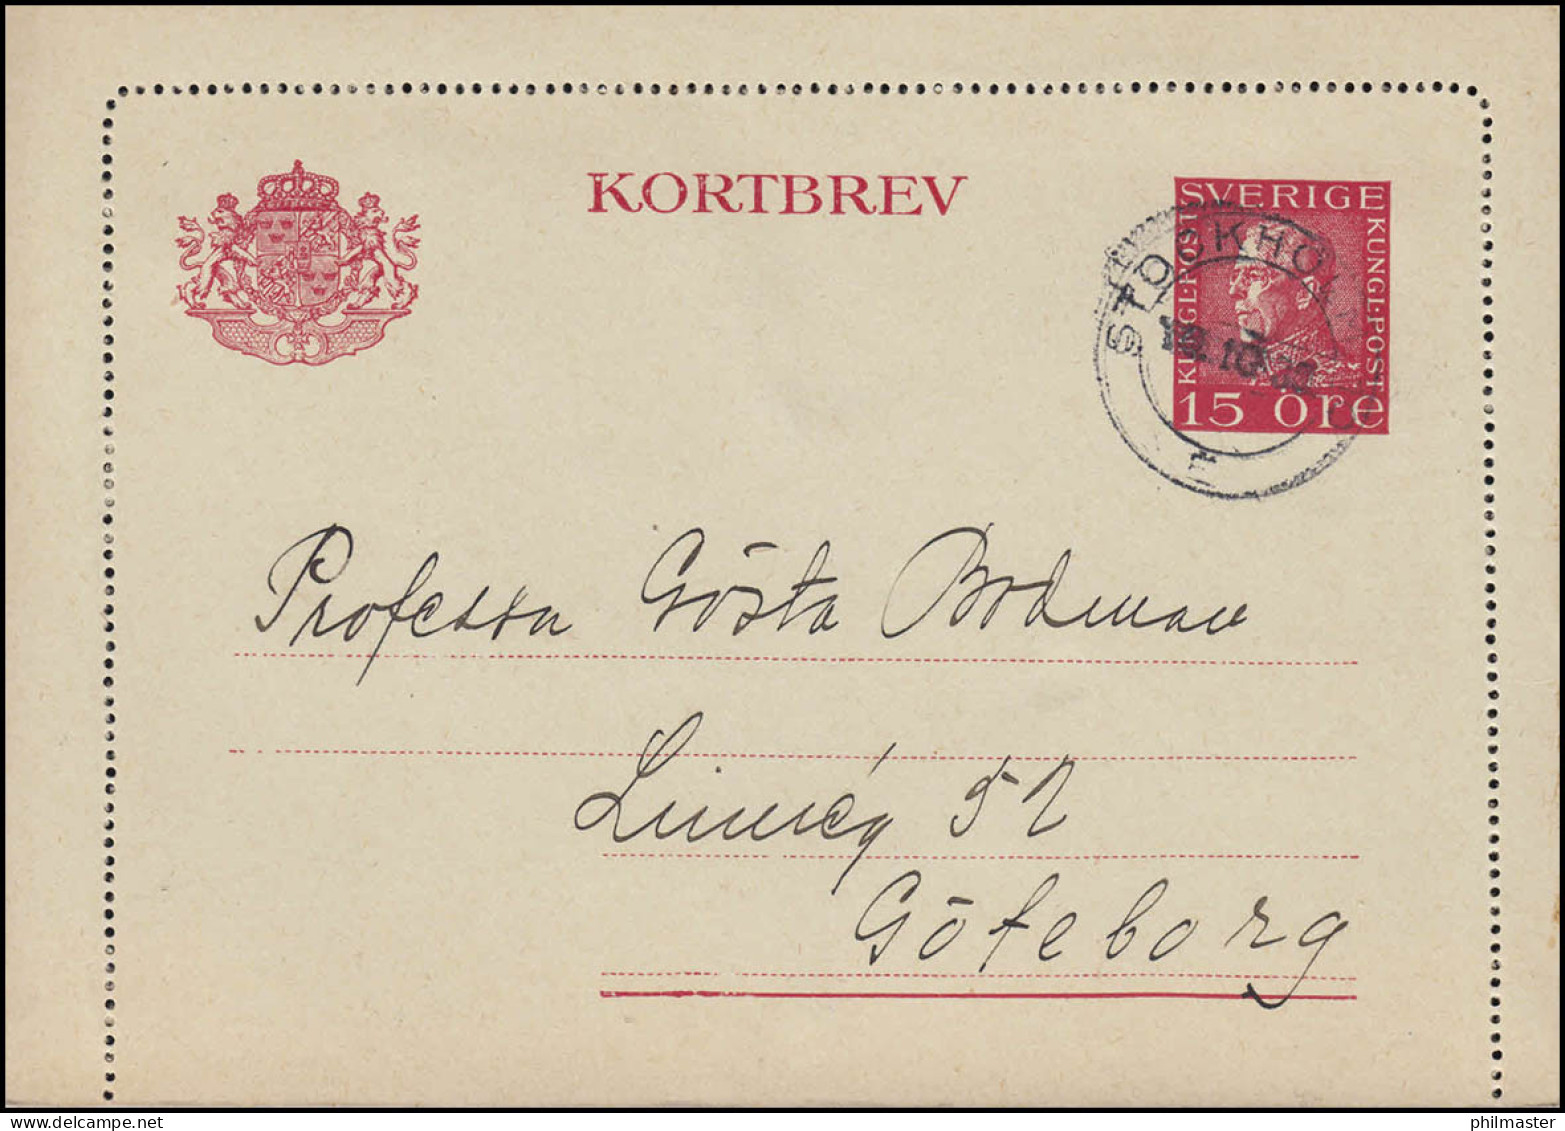 Kartenbrief K 27IW KORTBREV 15 Öre, STOCKHOLM 10.10.1930 Nach Göteborg - Enteros Postales